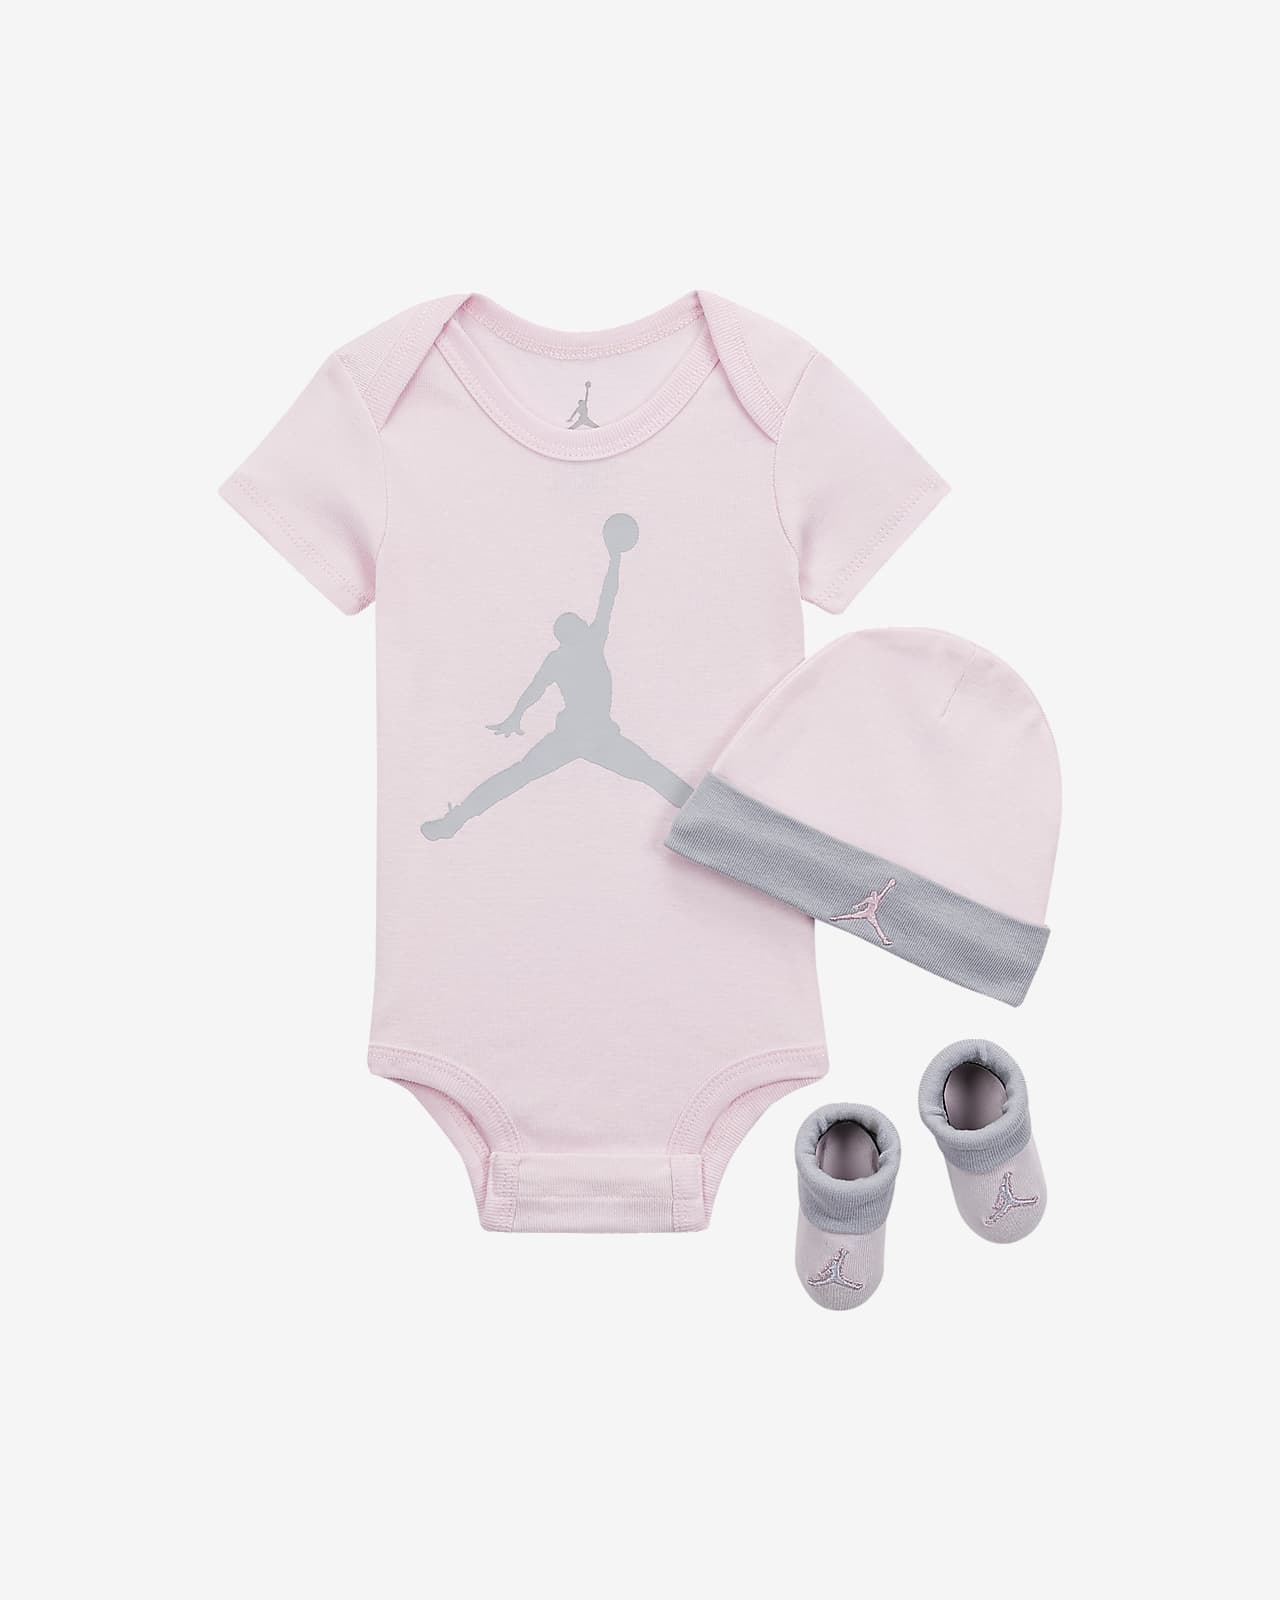 Jordan Jumpman Baby Bodysuit, Beanie and Booties Set. Nike.com